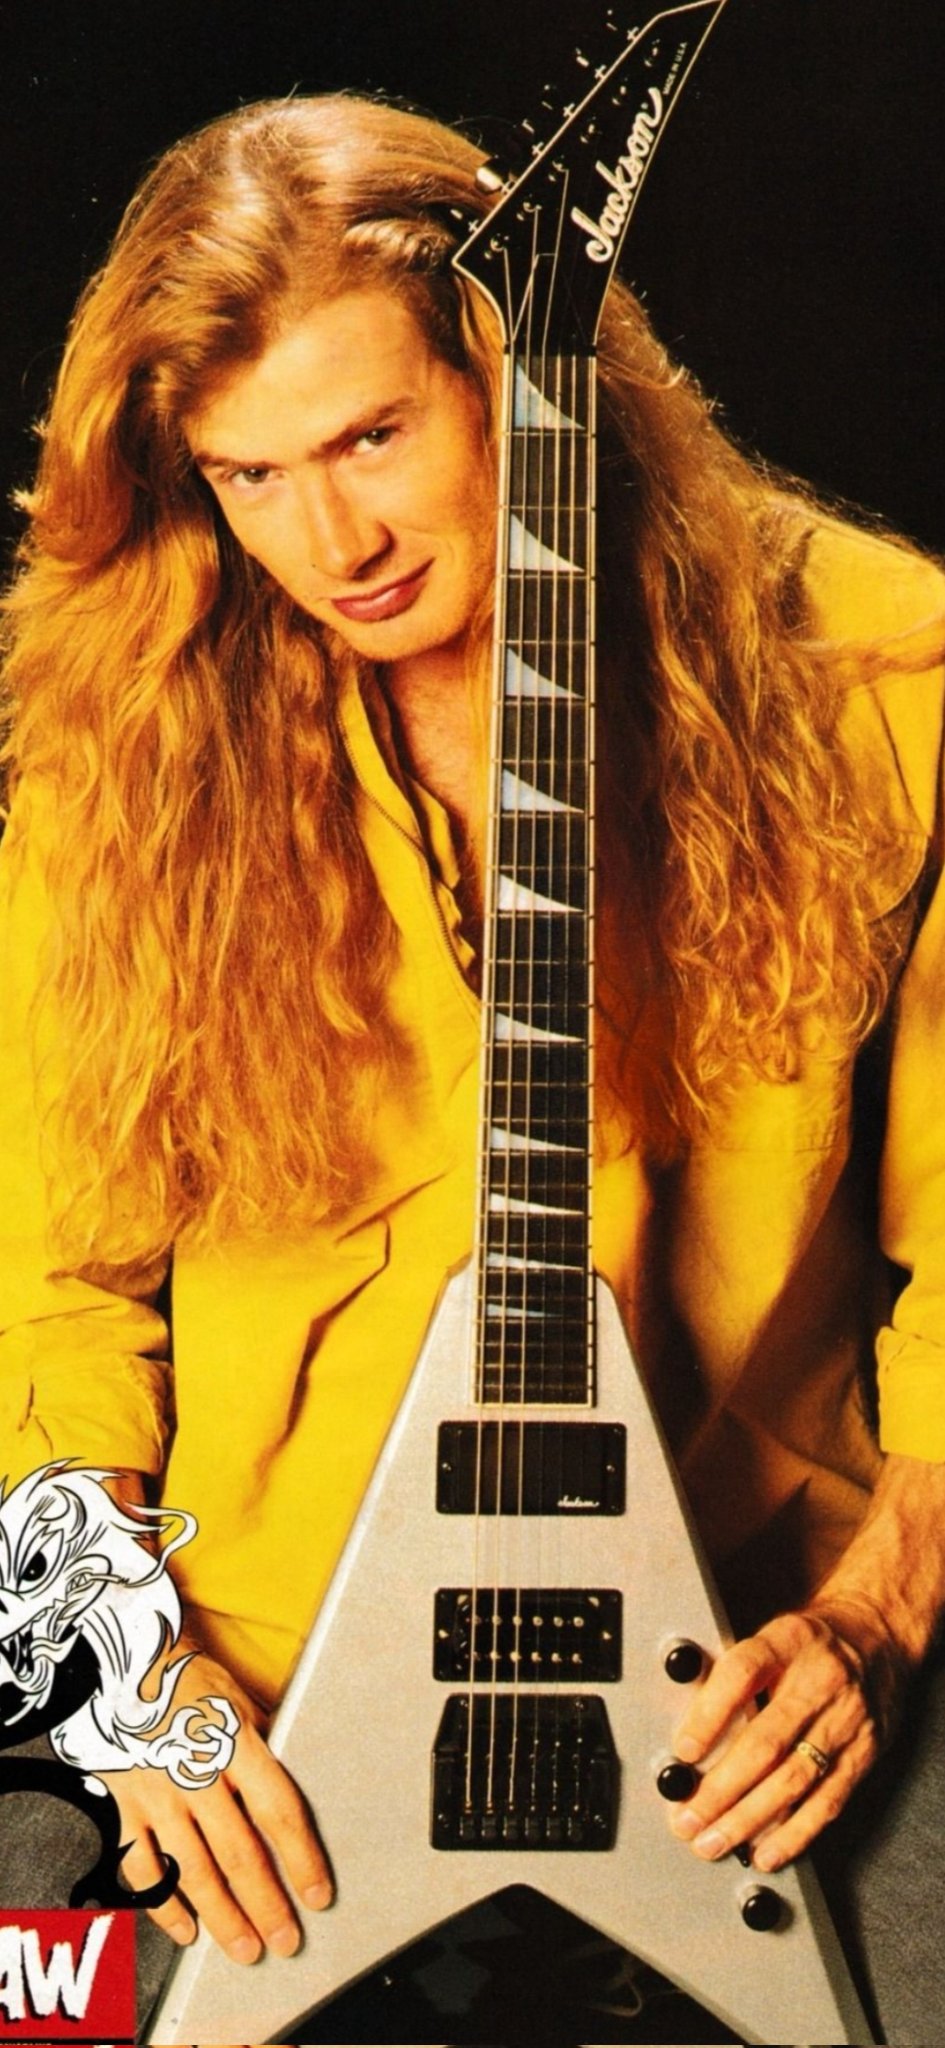 Happy Birthday Dave Mustaine
(Born 13 September, 1961)         